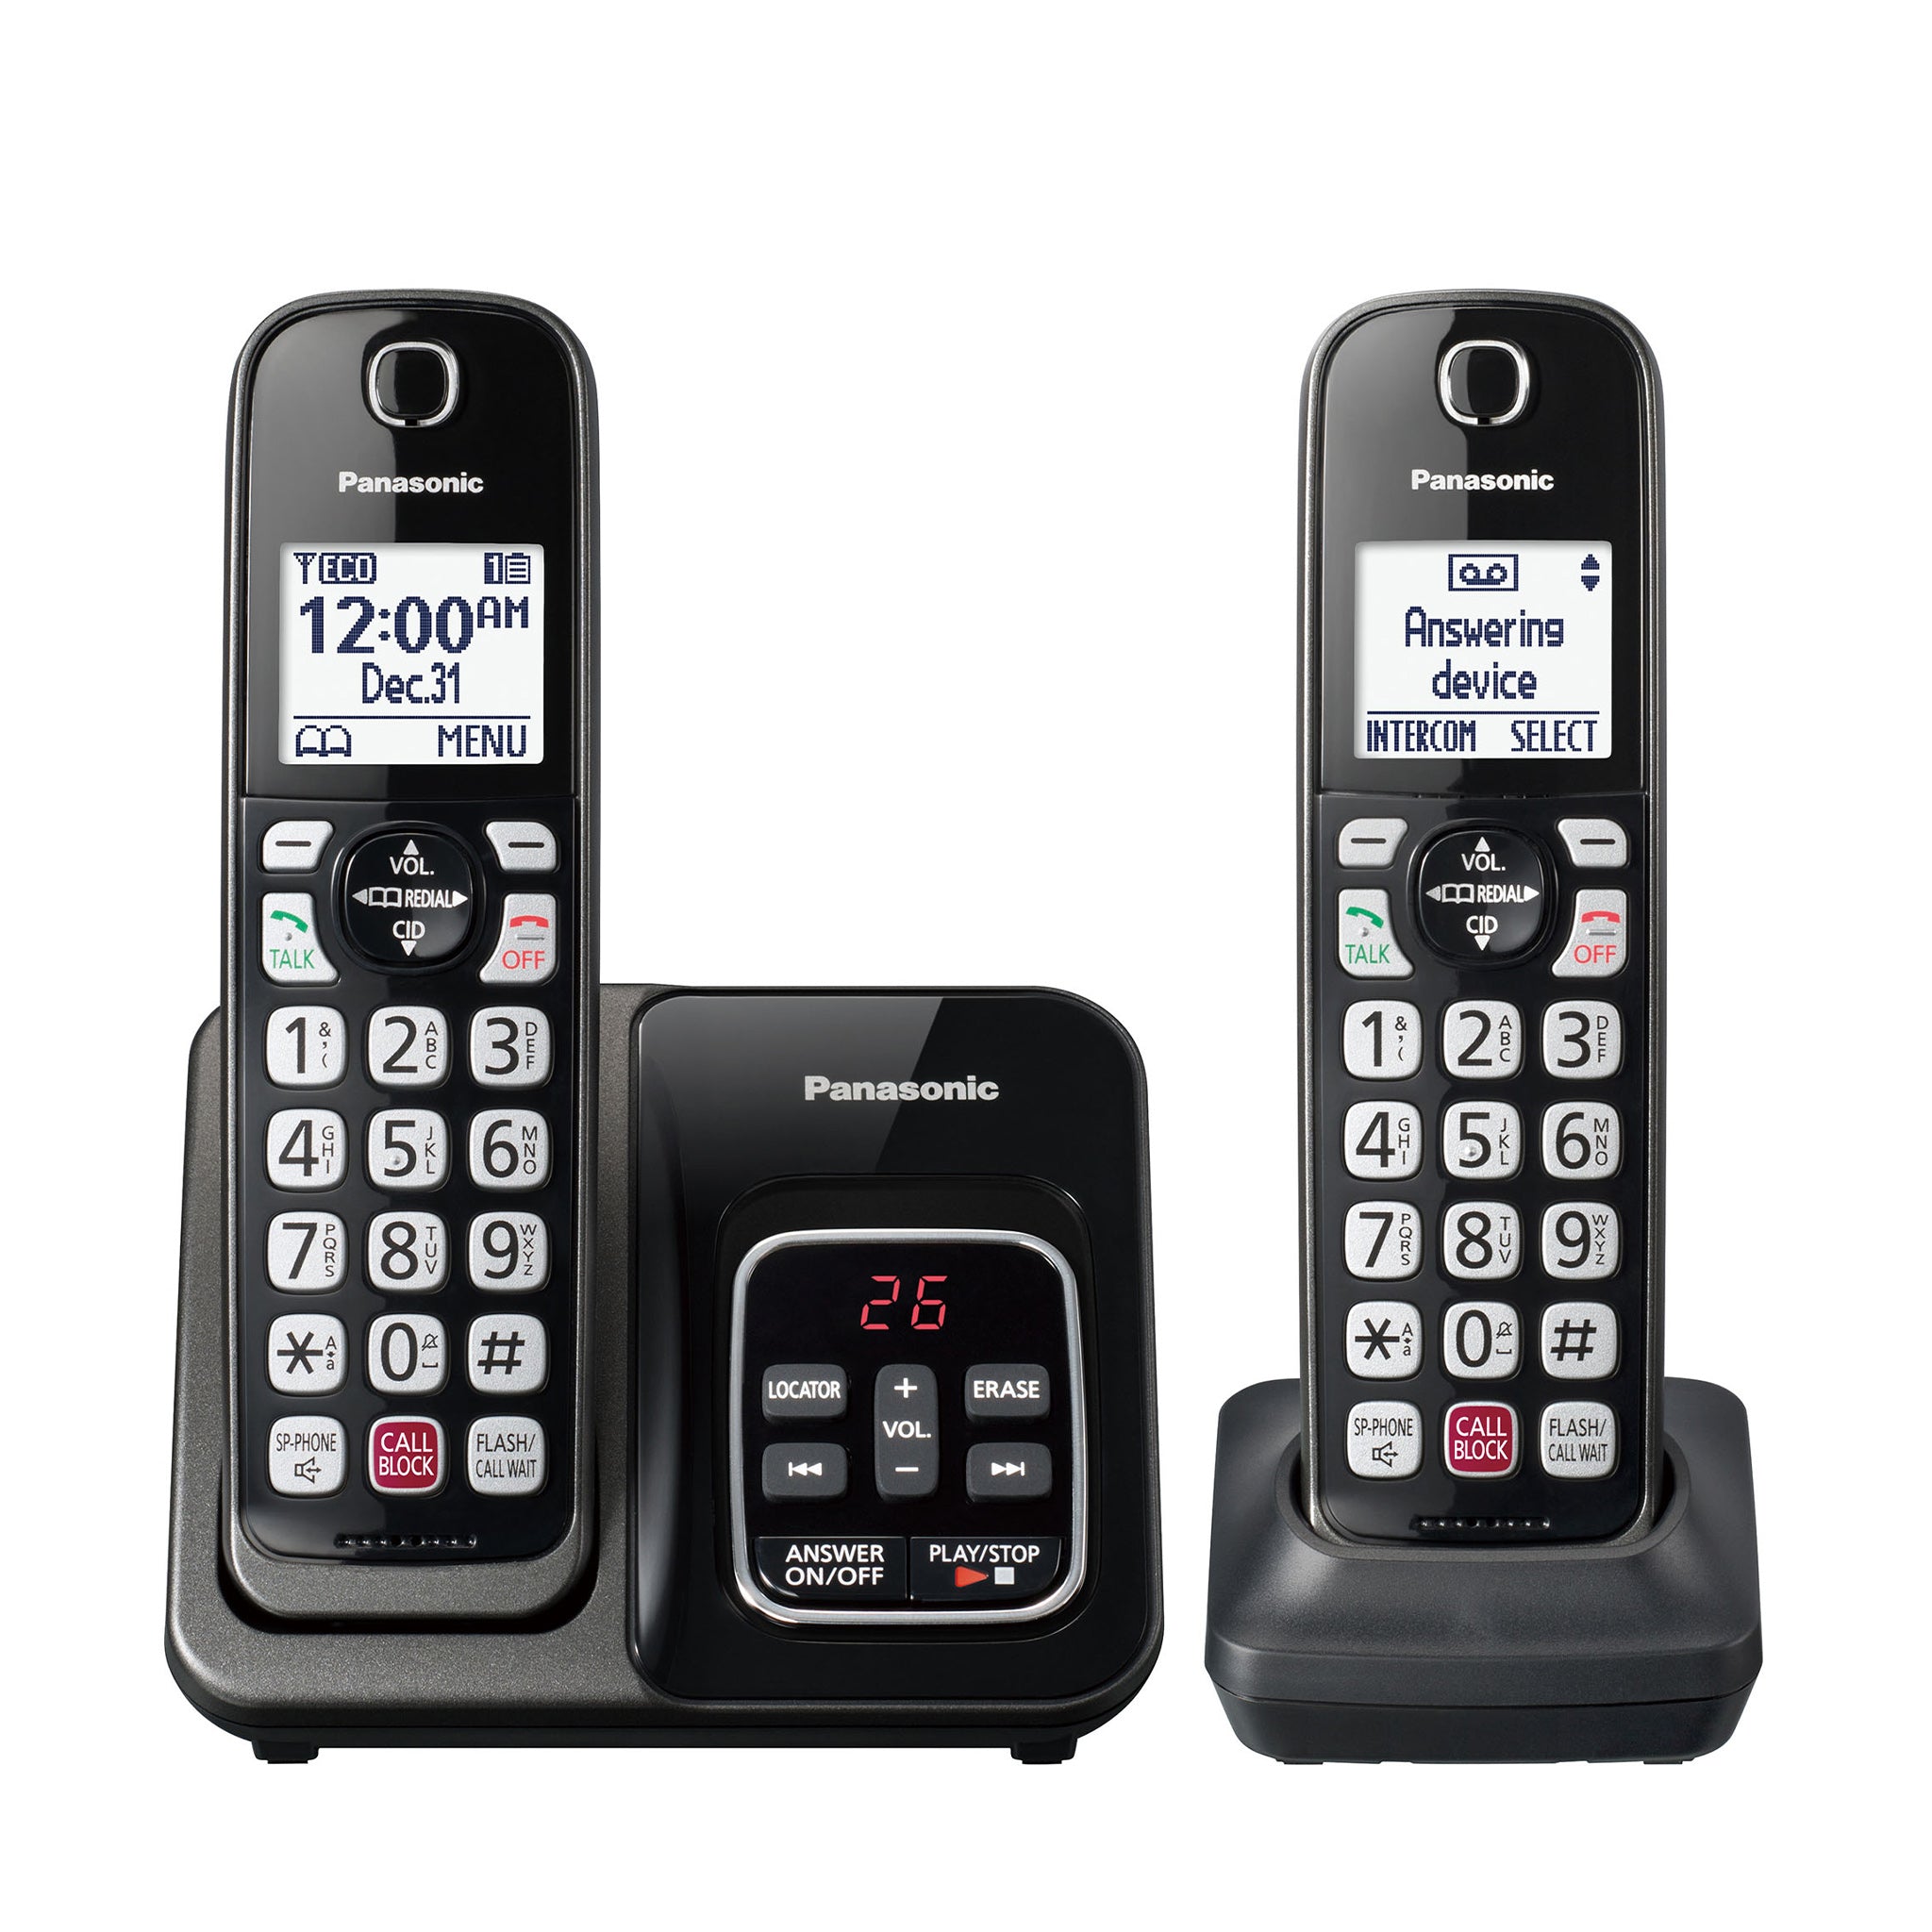 Cordless Phones for Sale: buy Cordless Landline Phones online